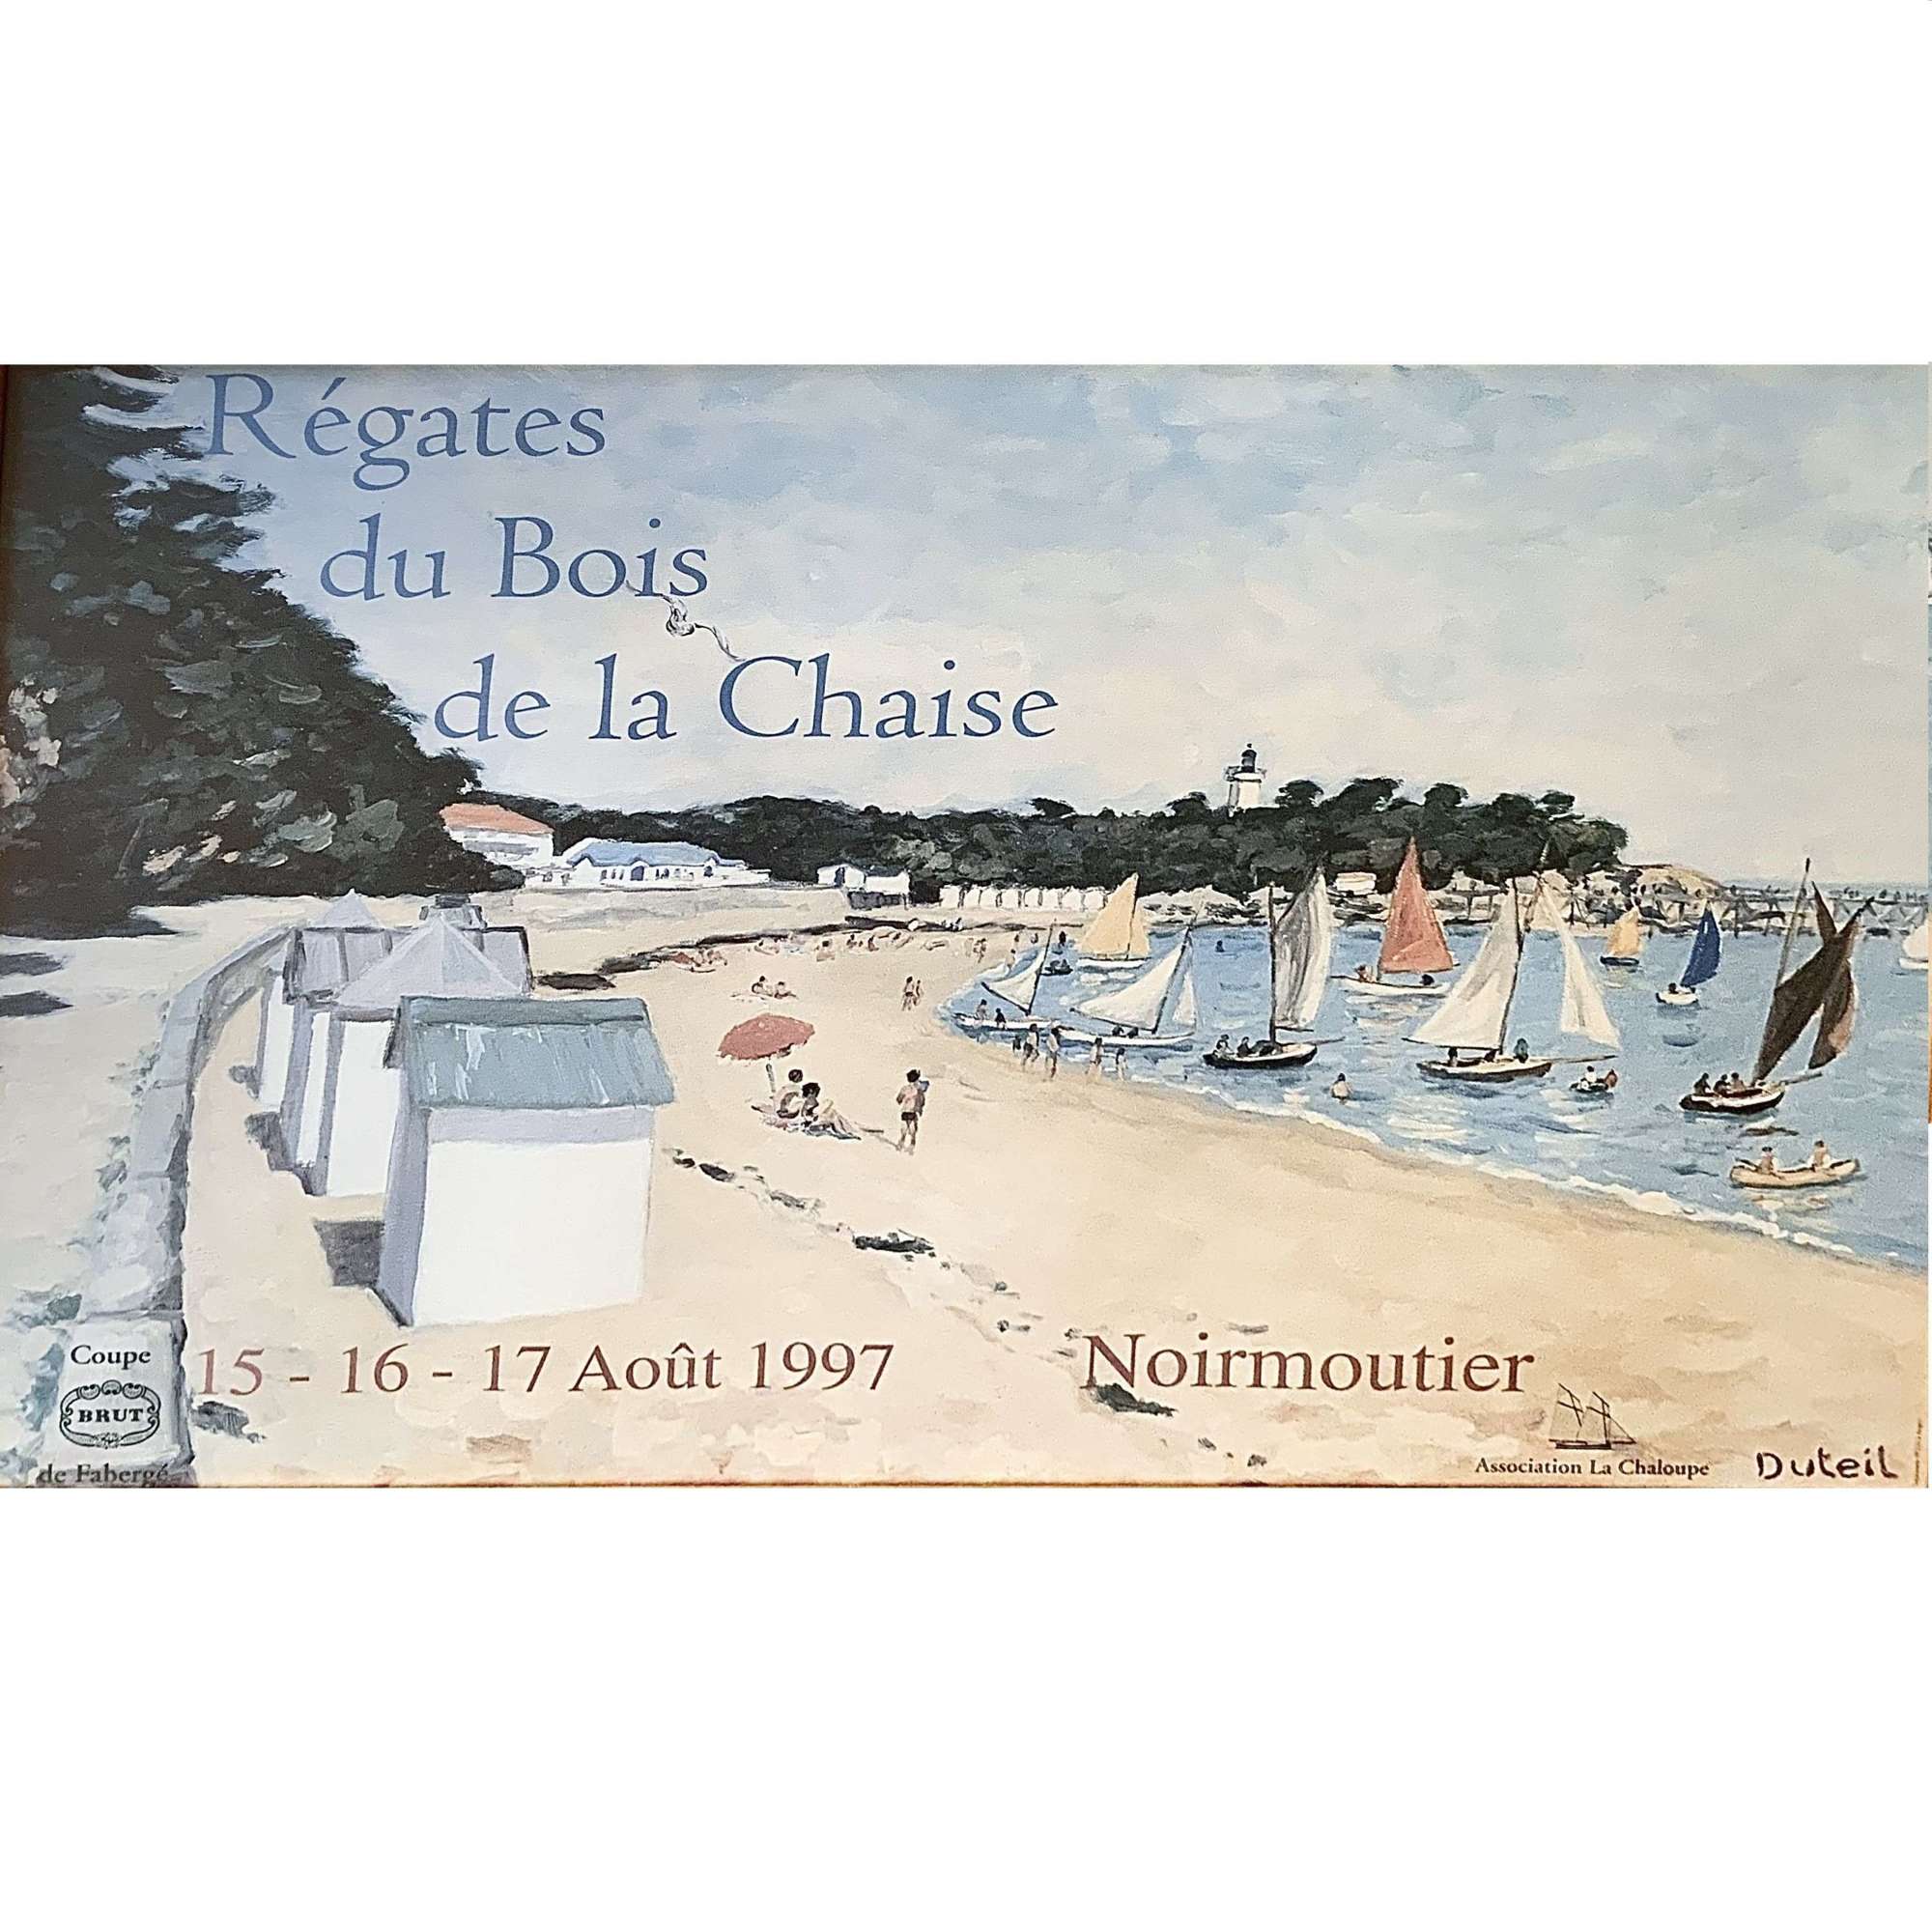 Jean-Claude Duteil (b.1950) Vintage French Sailing Regatta Poster